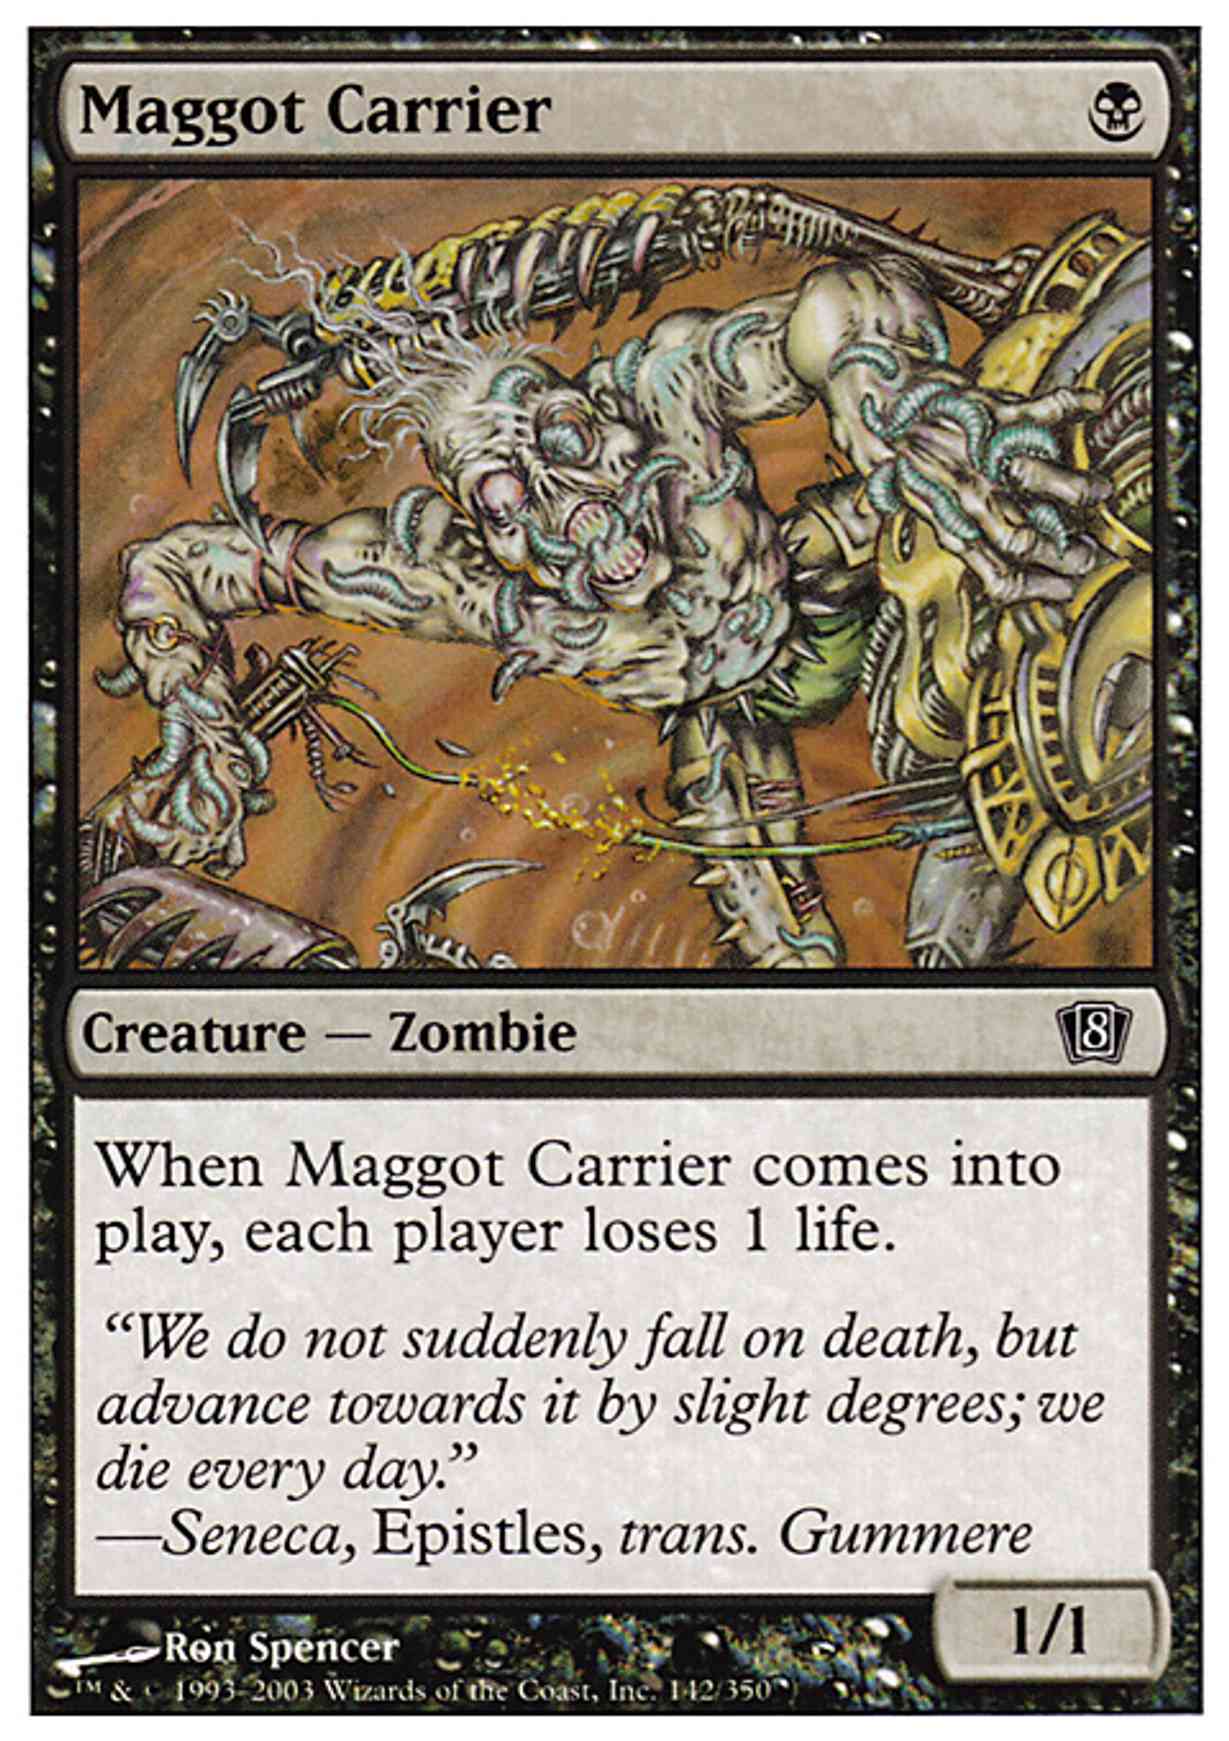 Maggot Carrier magic card front